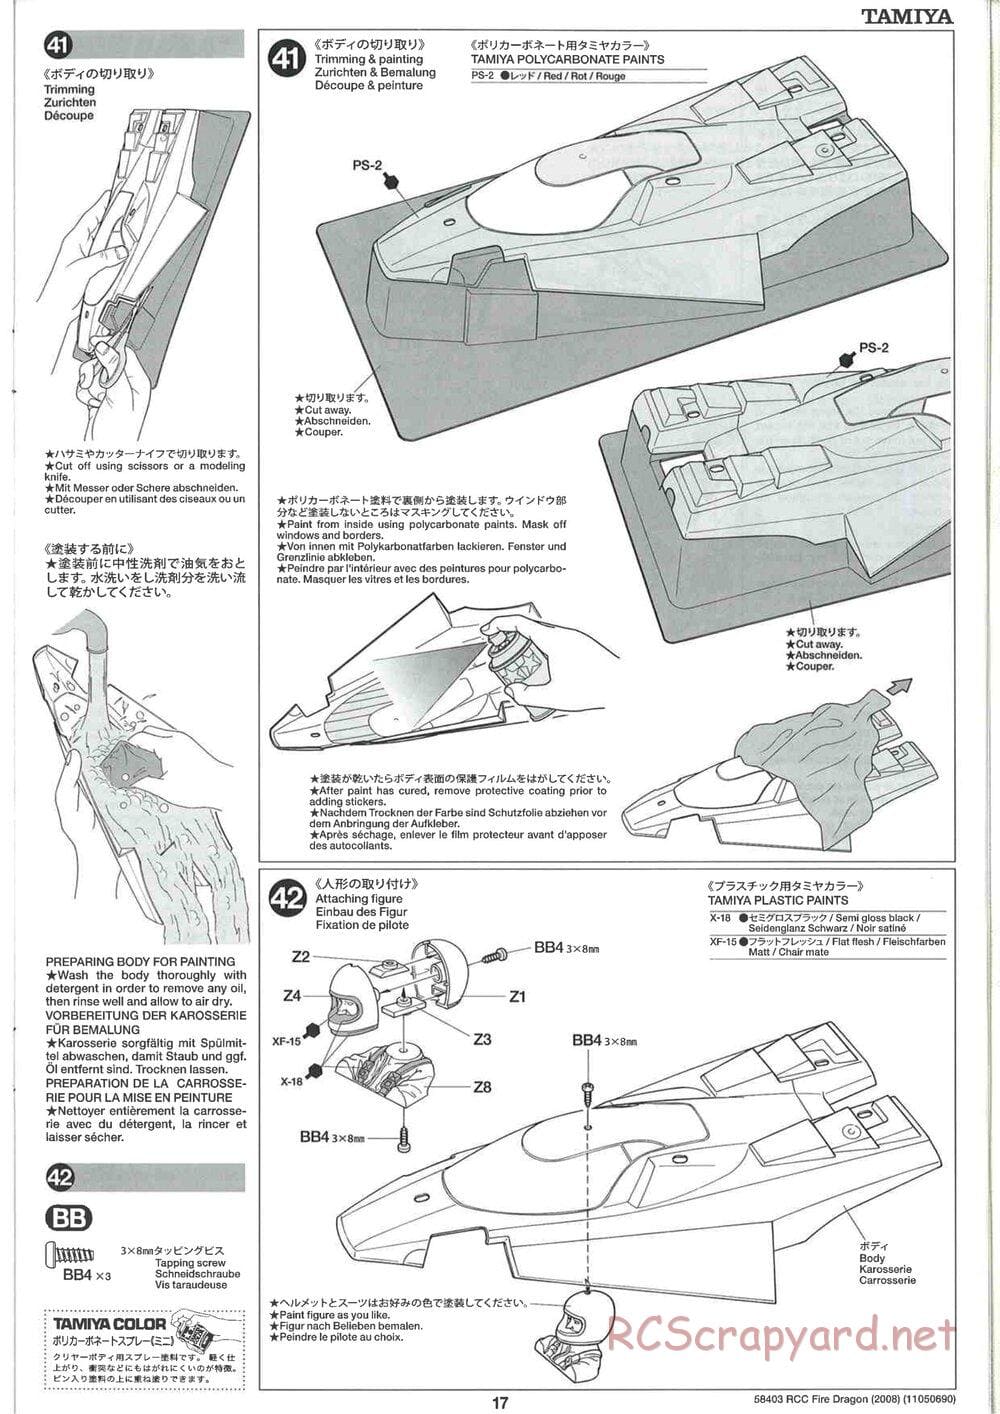 Tamiya - Fire Dragon 2008 - TS2 Chassis - Manual - Page 17